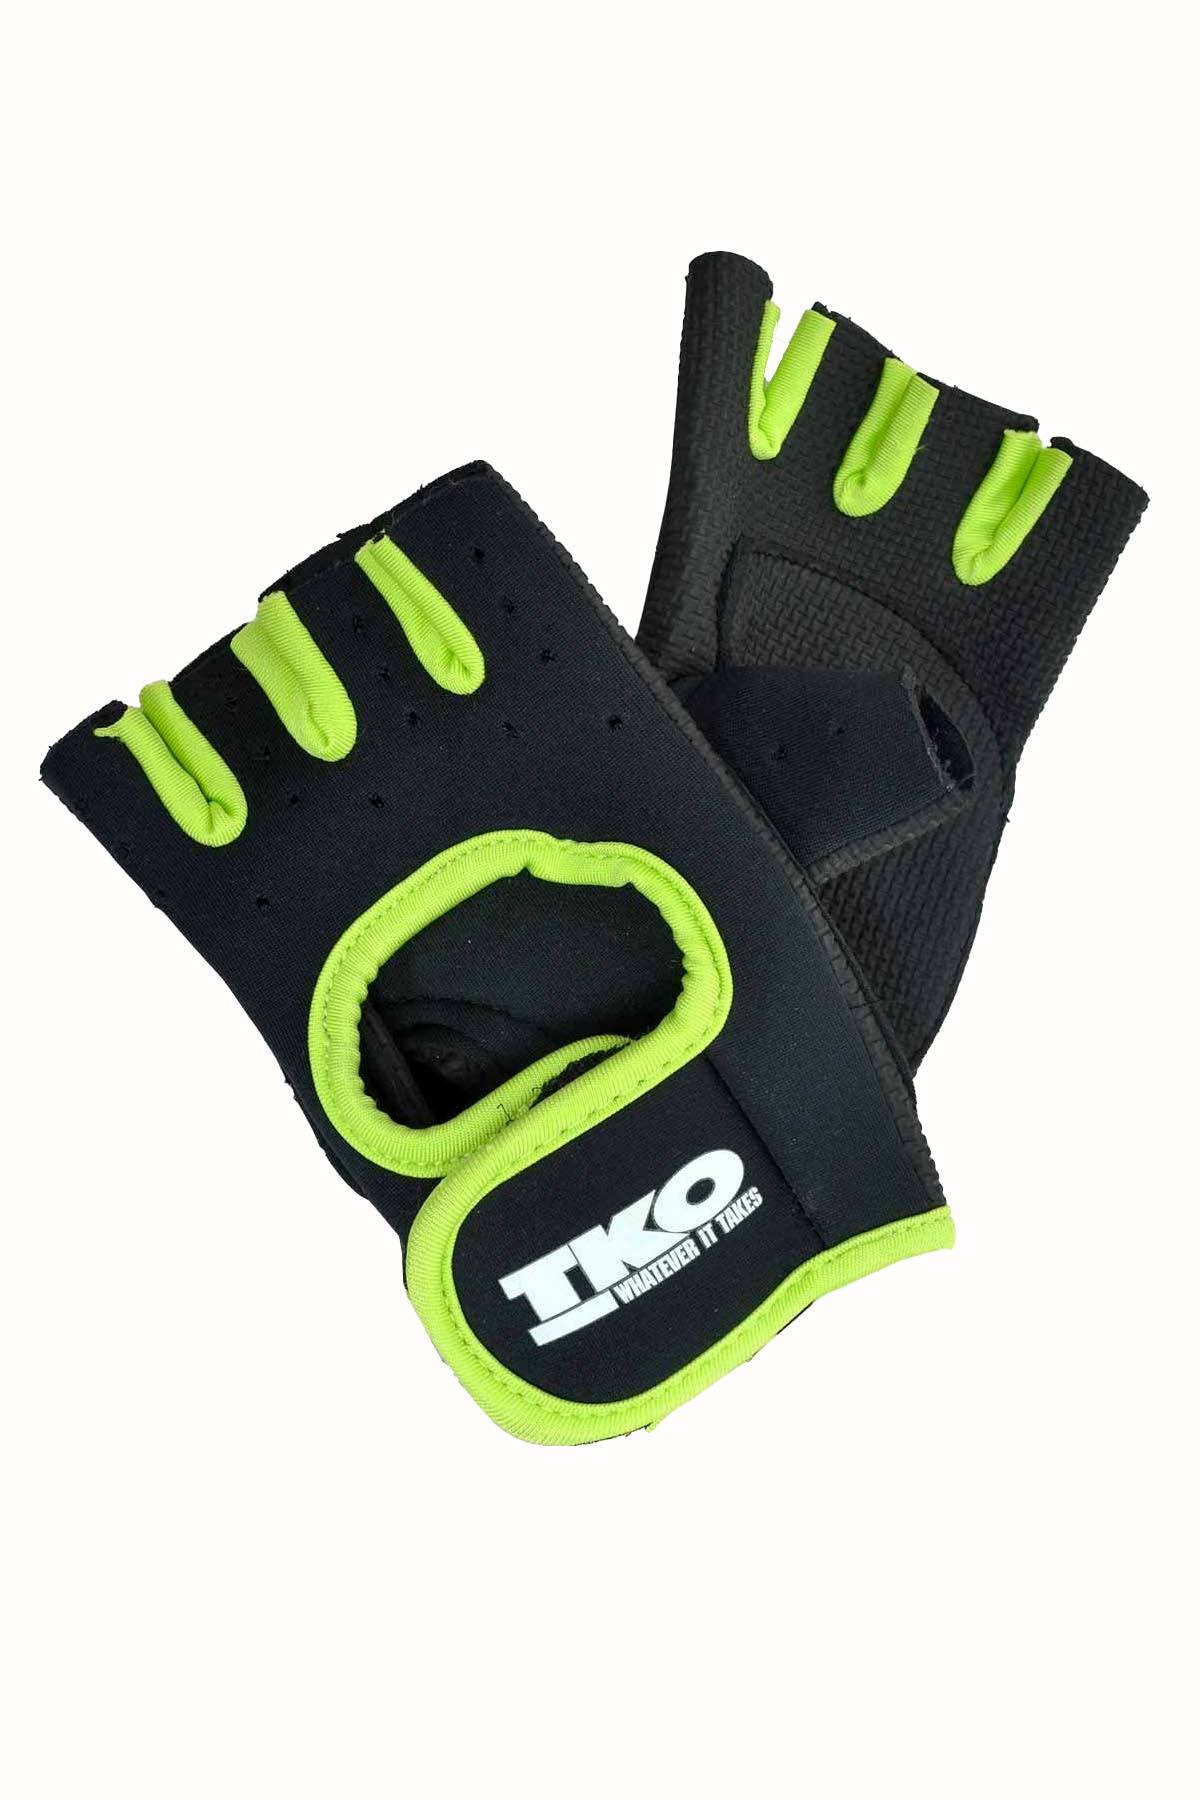 TKO Black & Green Universal Padded Athletic Gloves